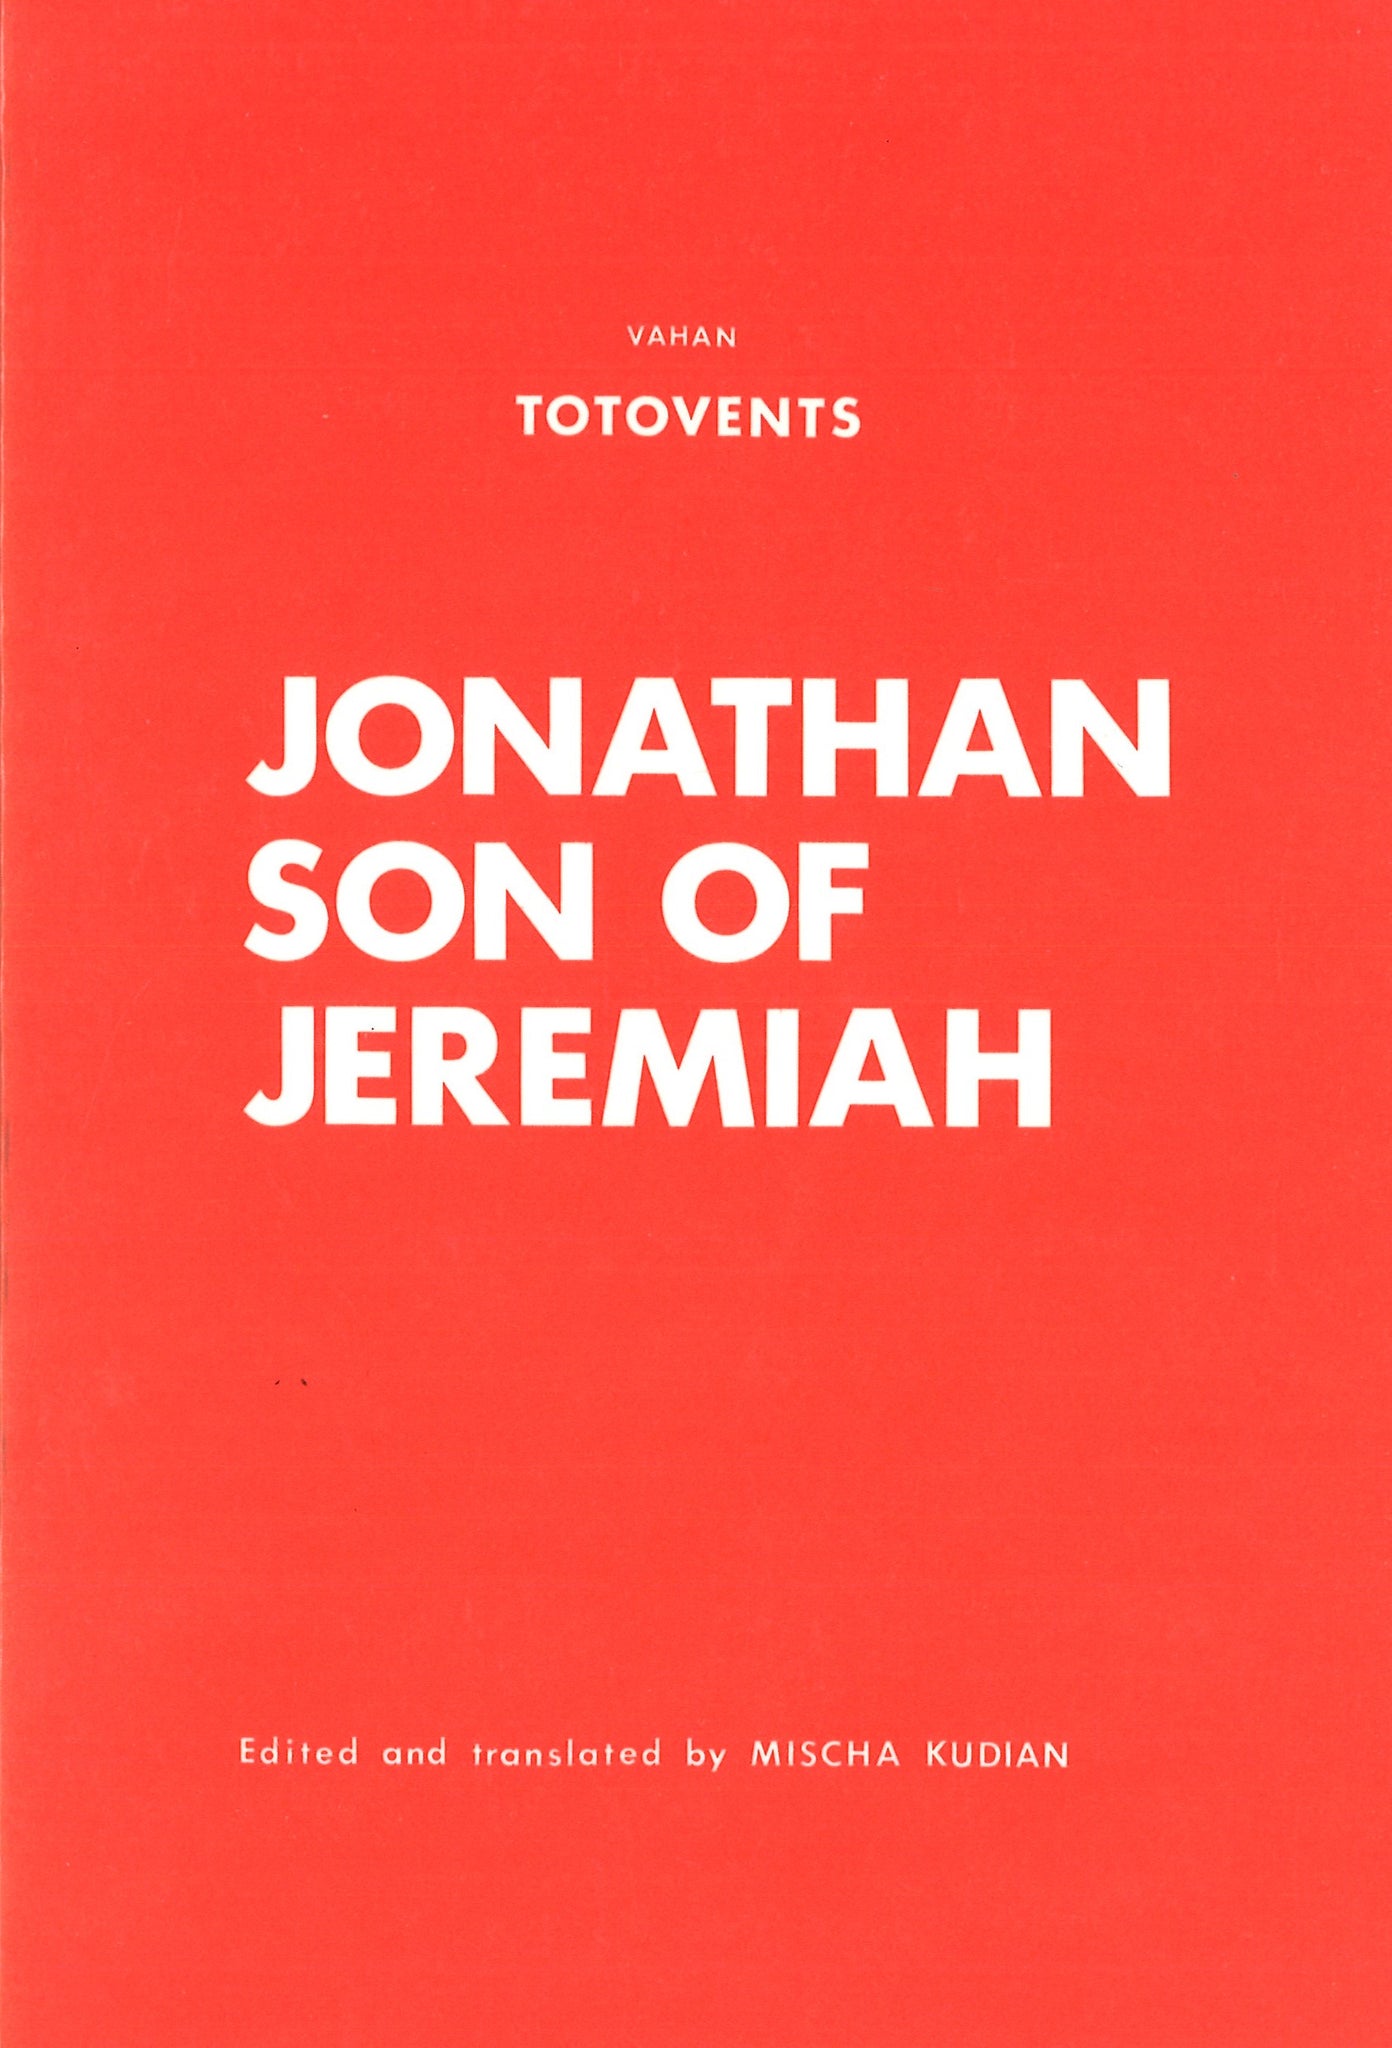 JONATHAN, SON OF JEREMIAH